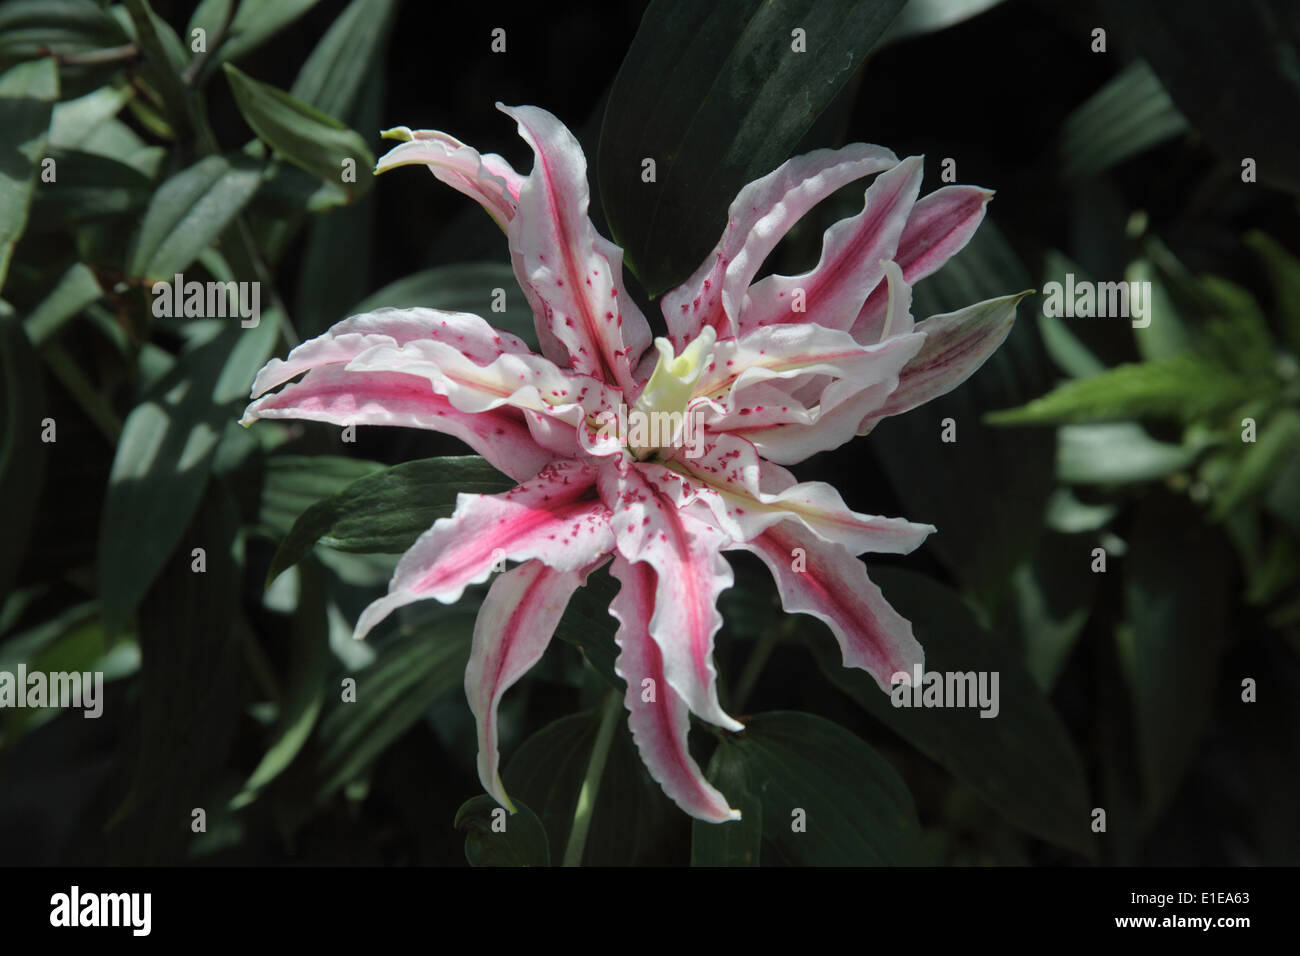 Lilium 'Double original' close up of flower Stock Photo